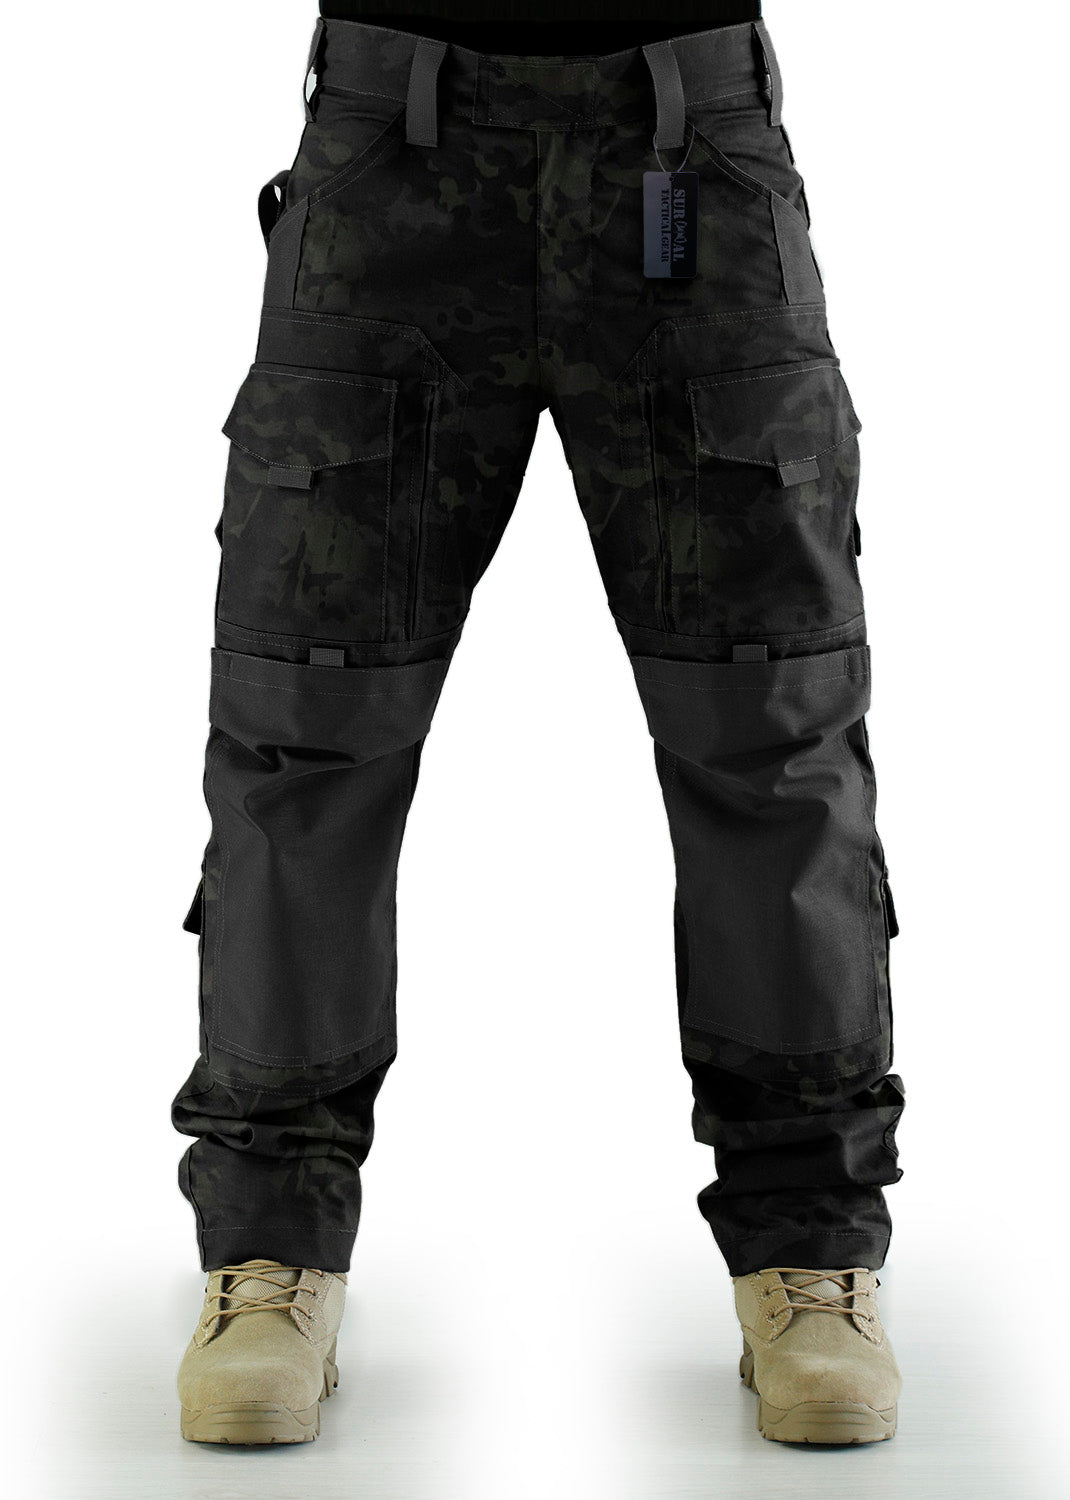 Rothco Tactical BDU Cargo Pants (Black) | Uniform Tactical Supply